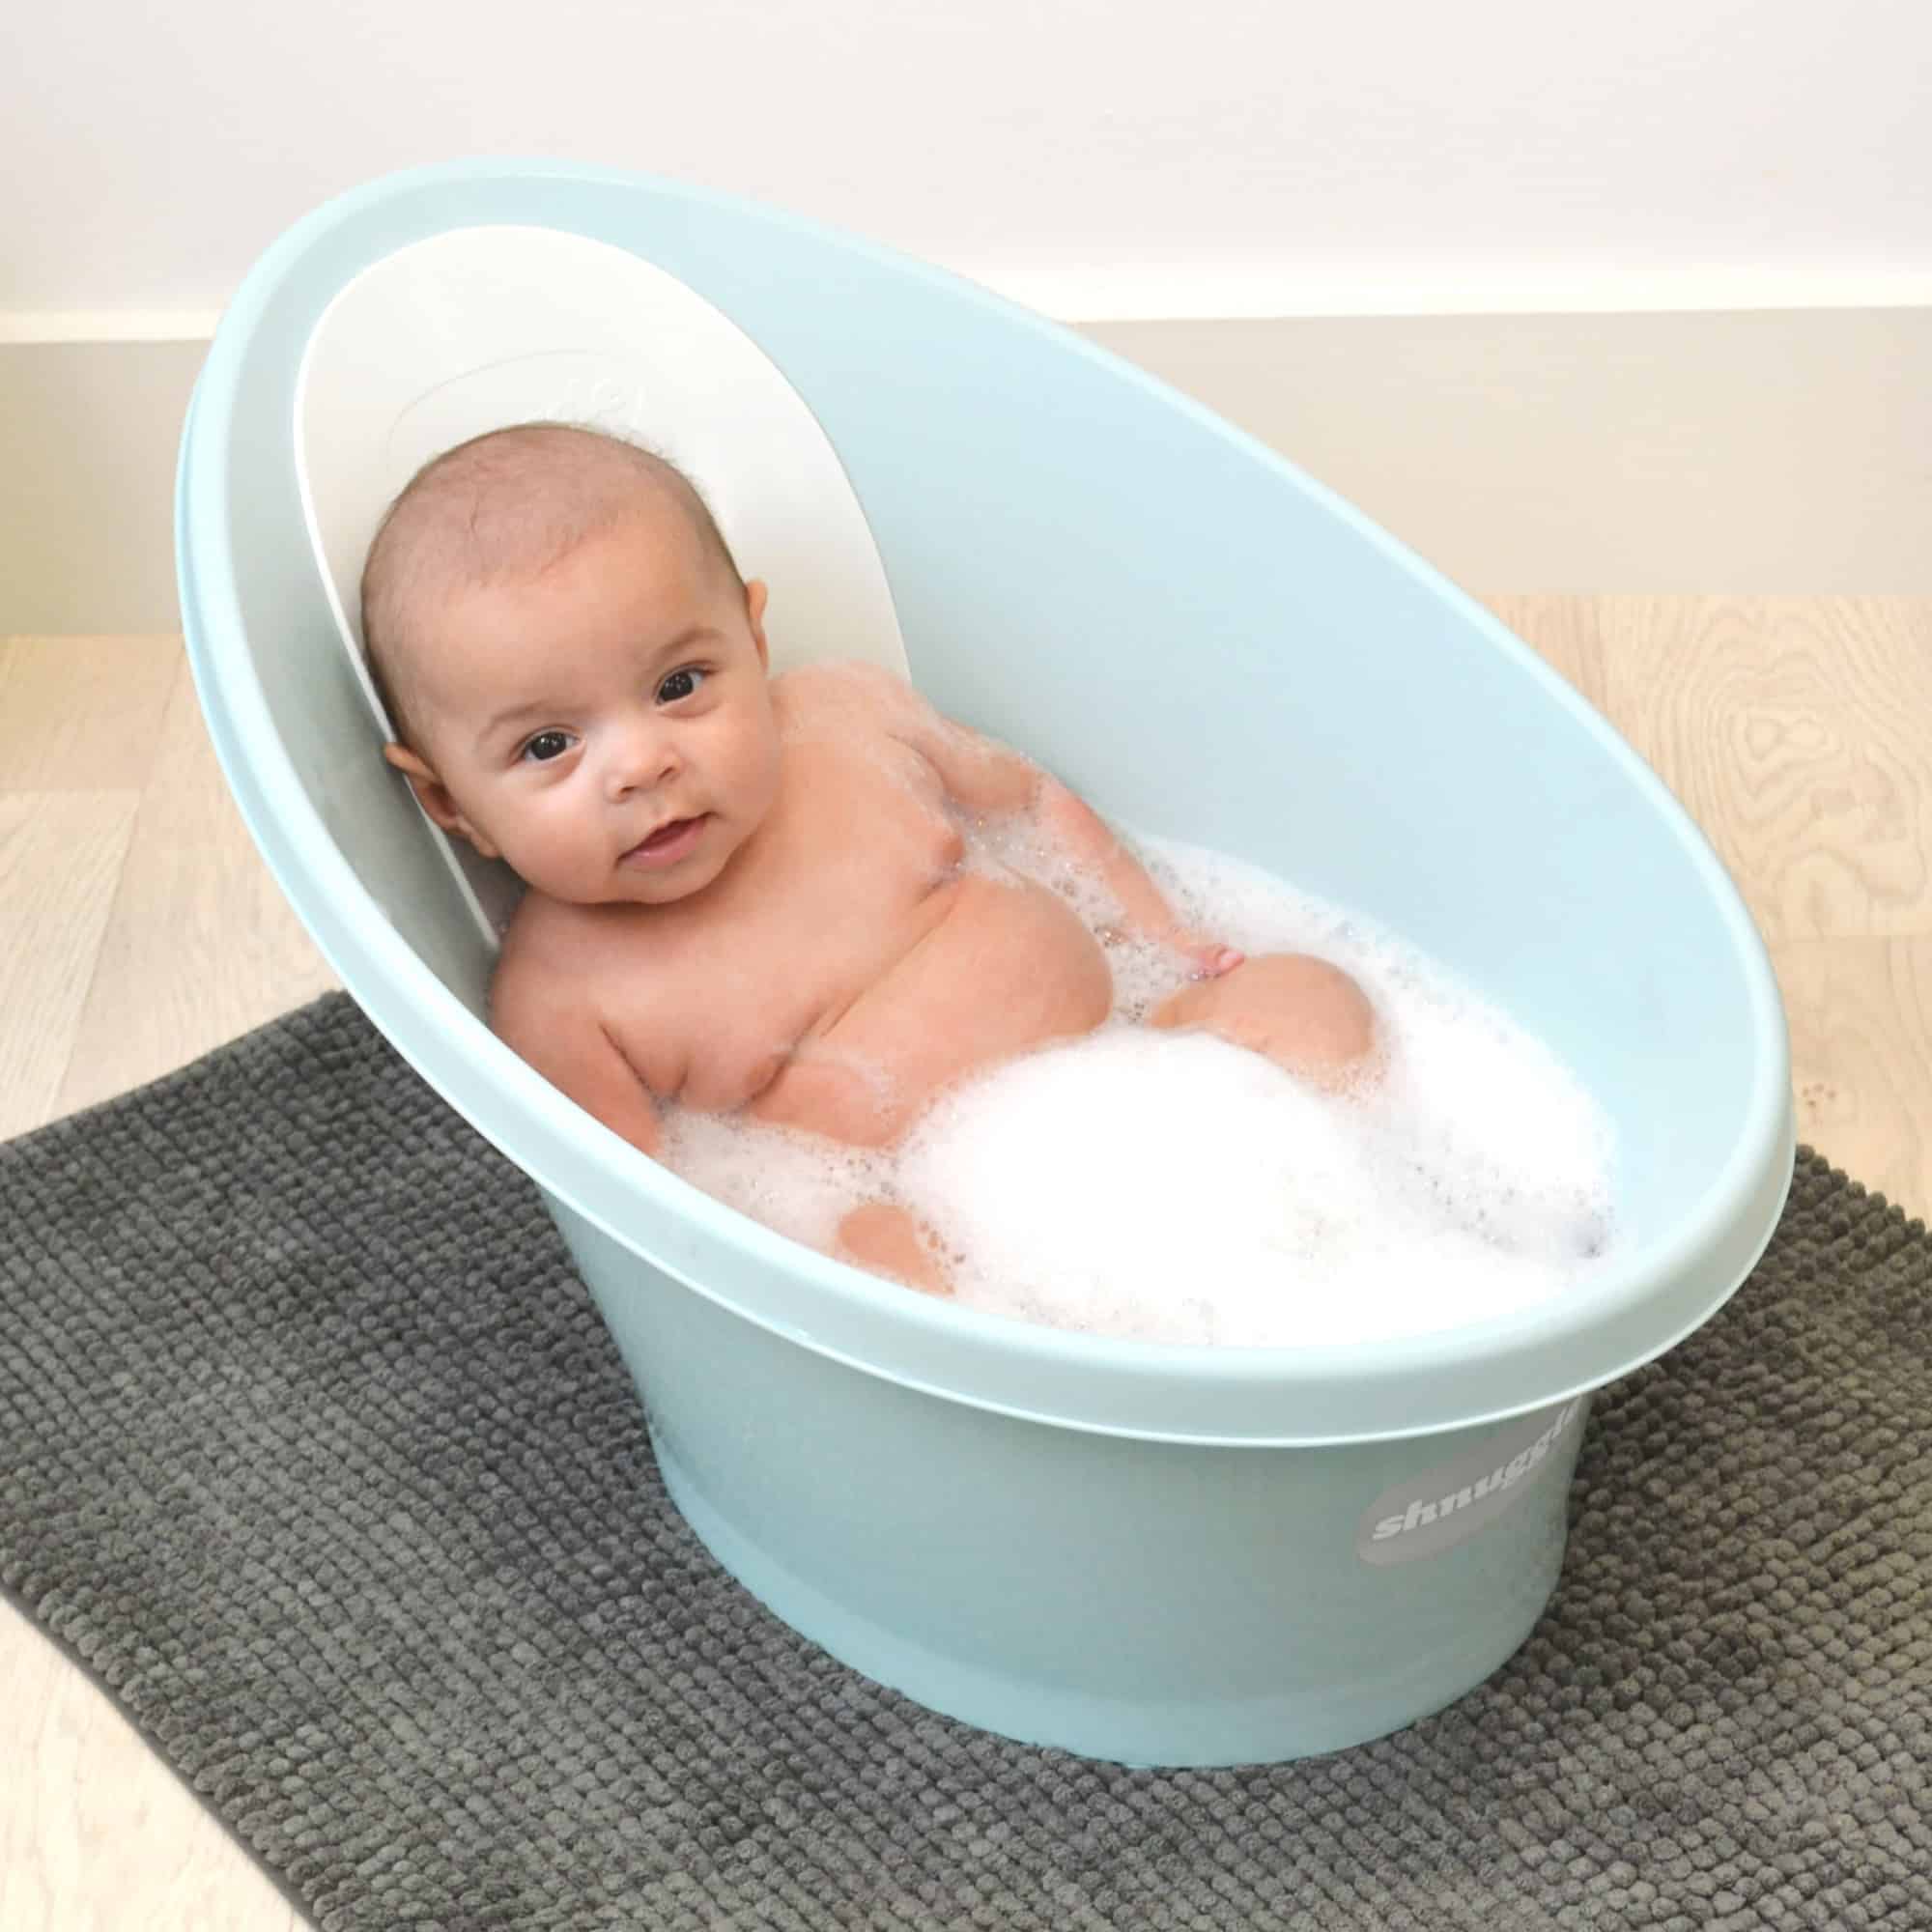 Baby sitting in Beaba by Shnuggle Baby bath